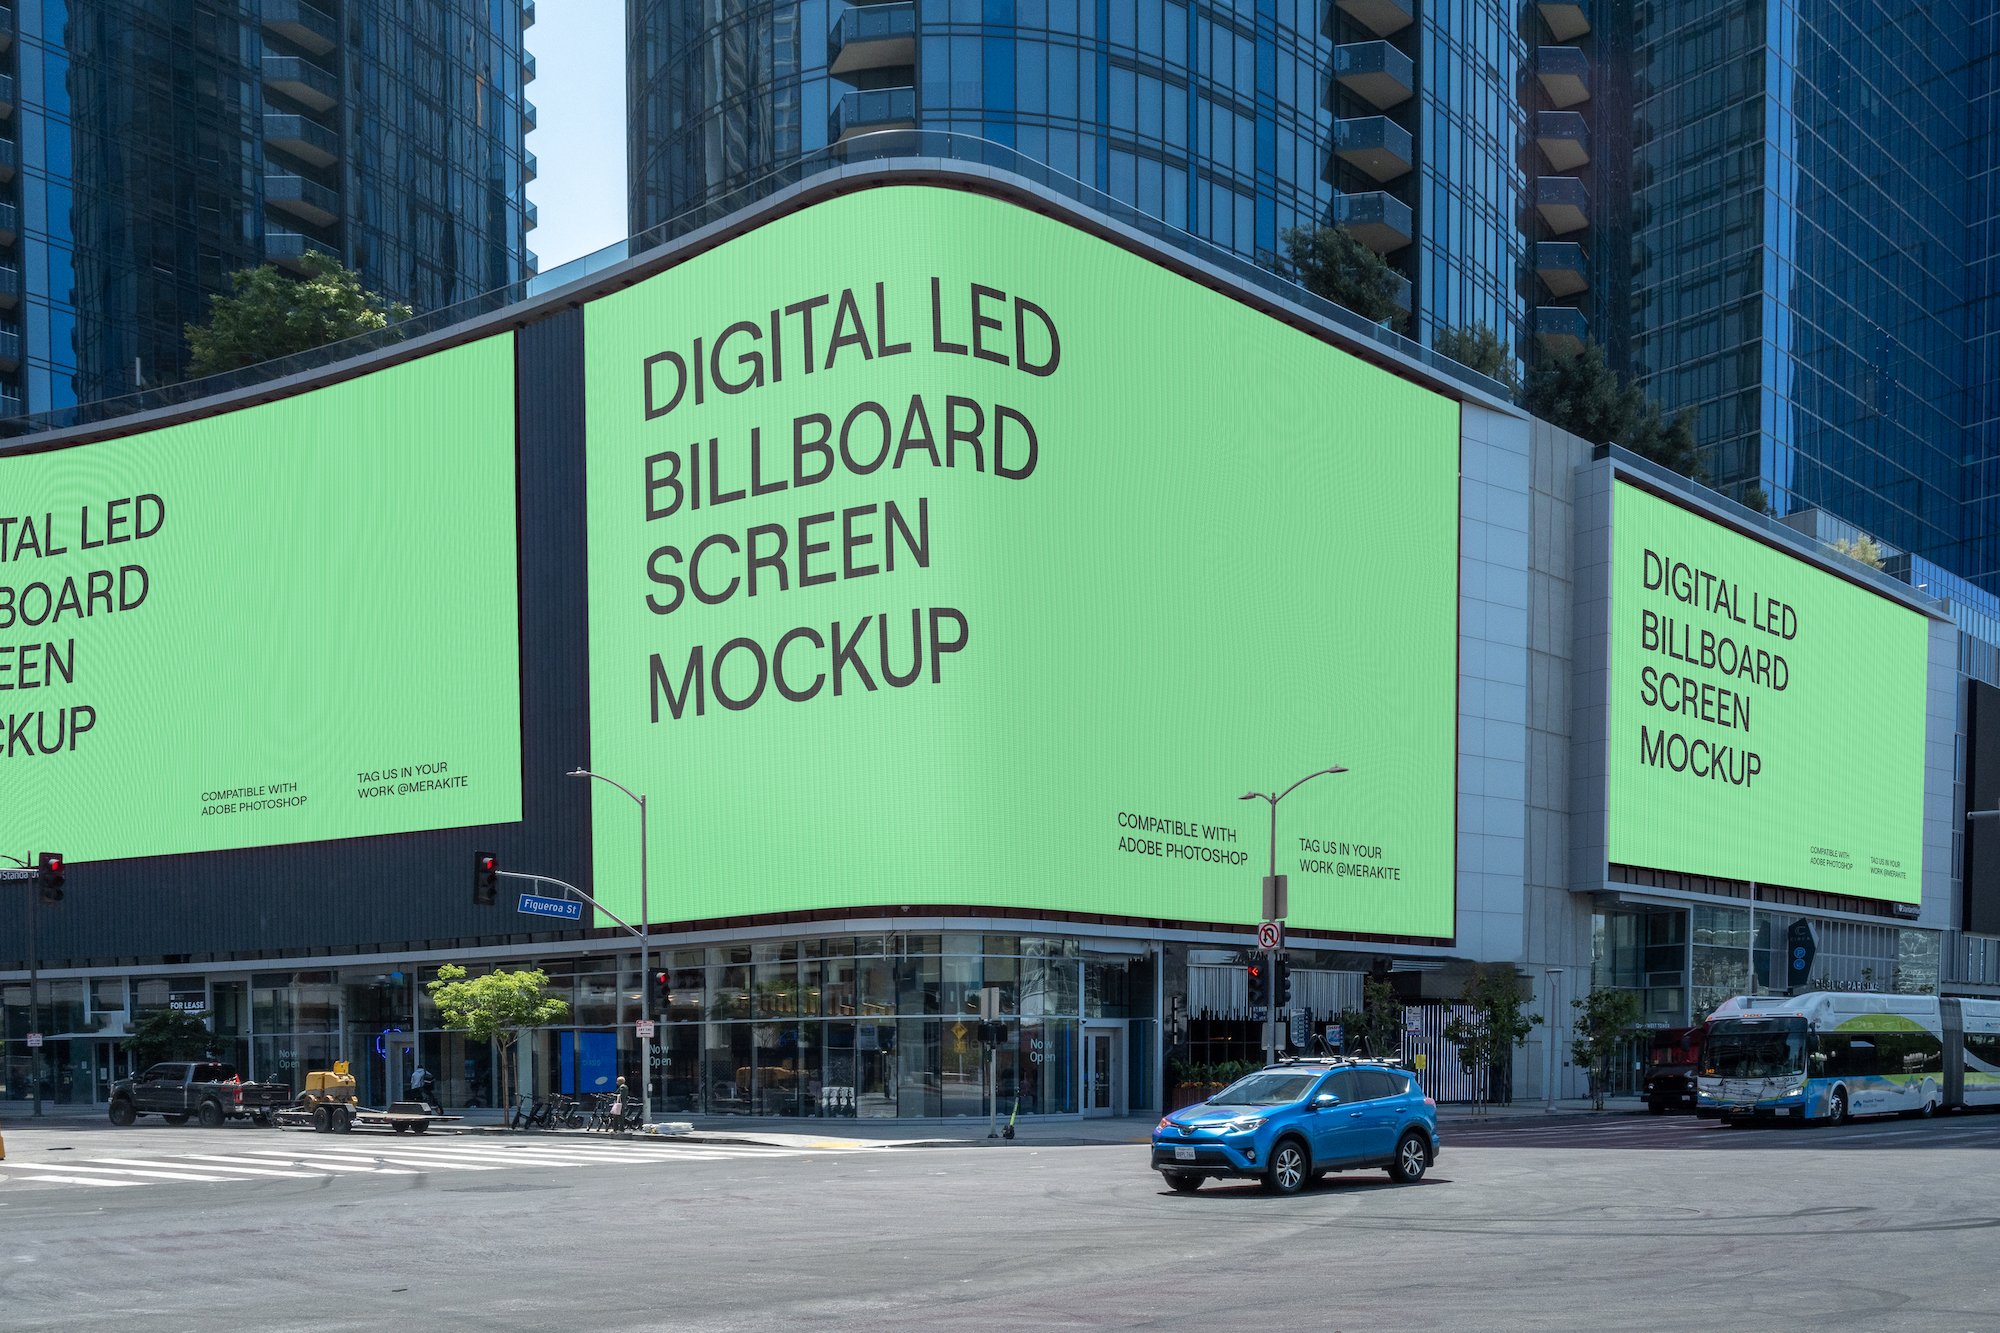 Big Screen City Billboard Mockup PSD cover image.